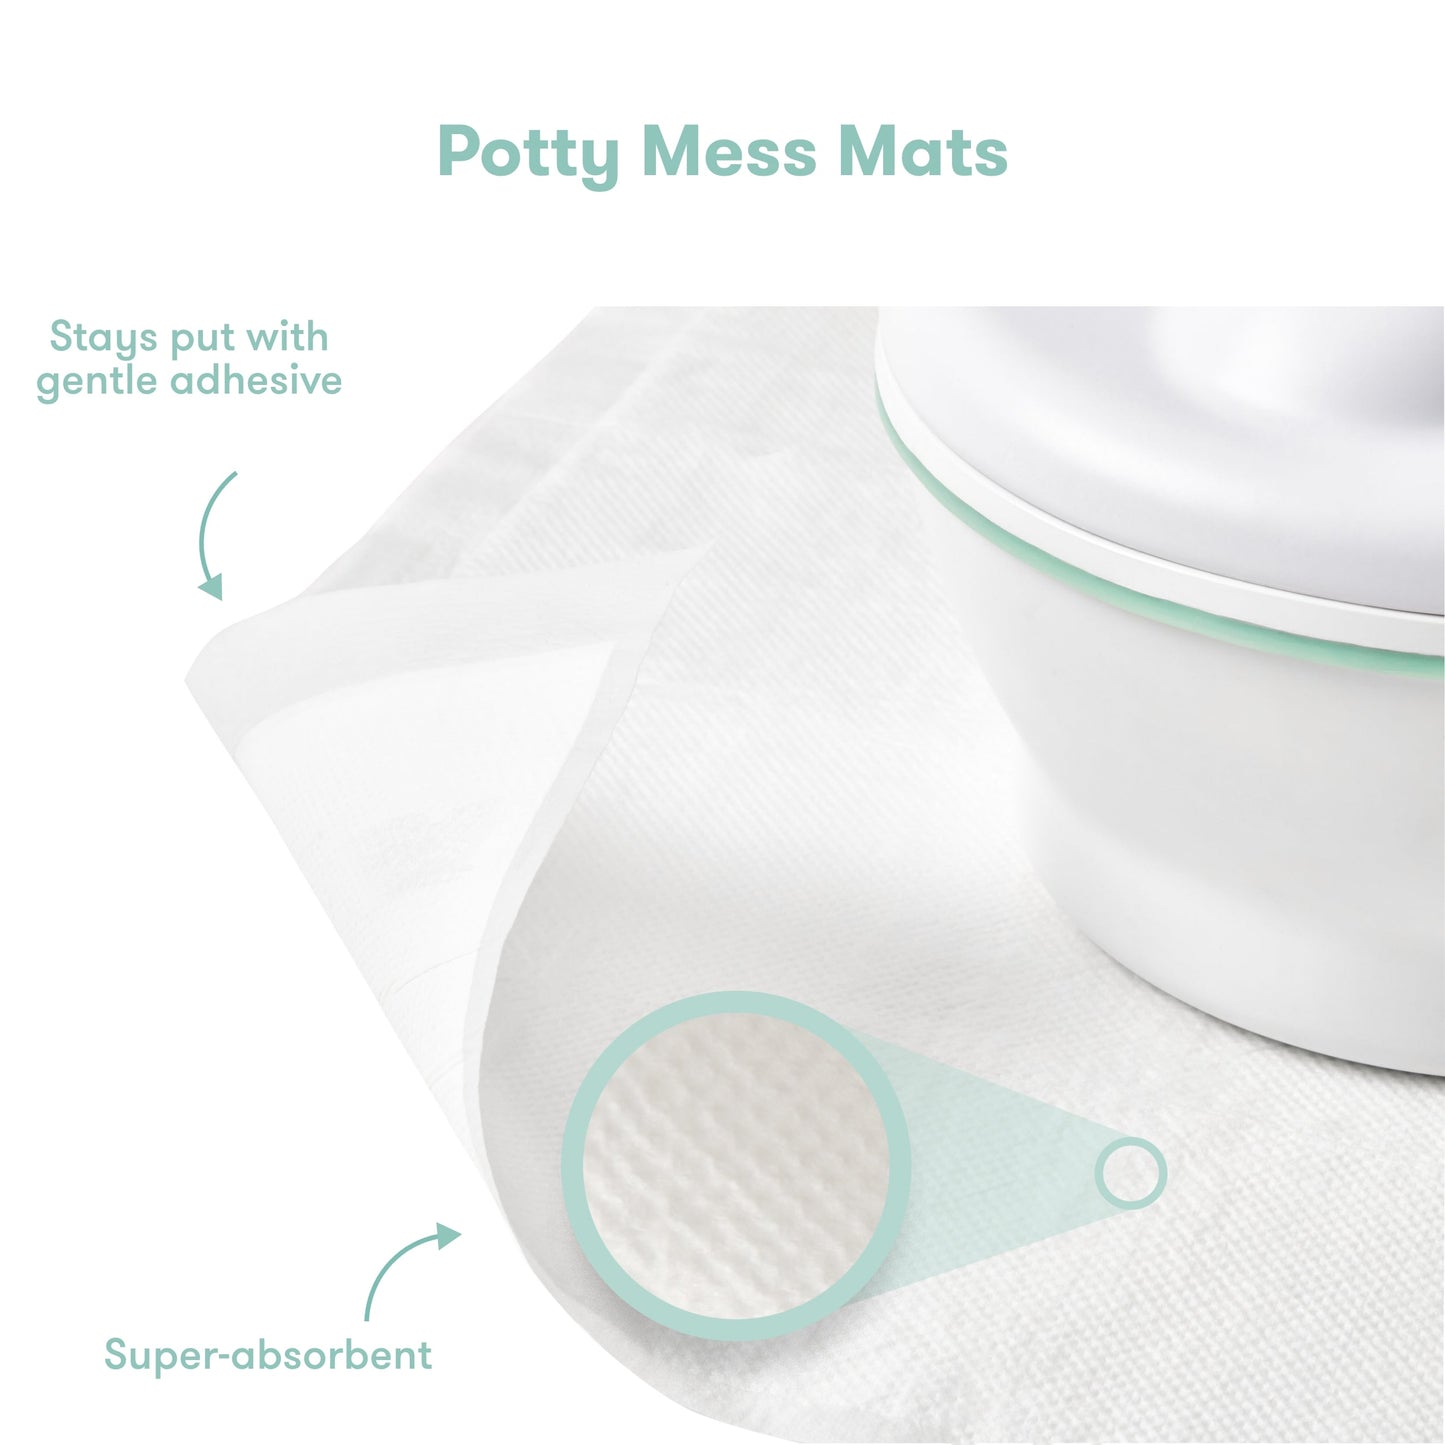 Potty Cleanup Essentials